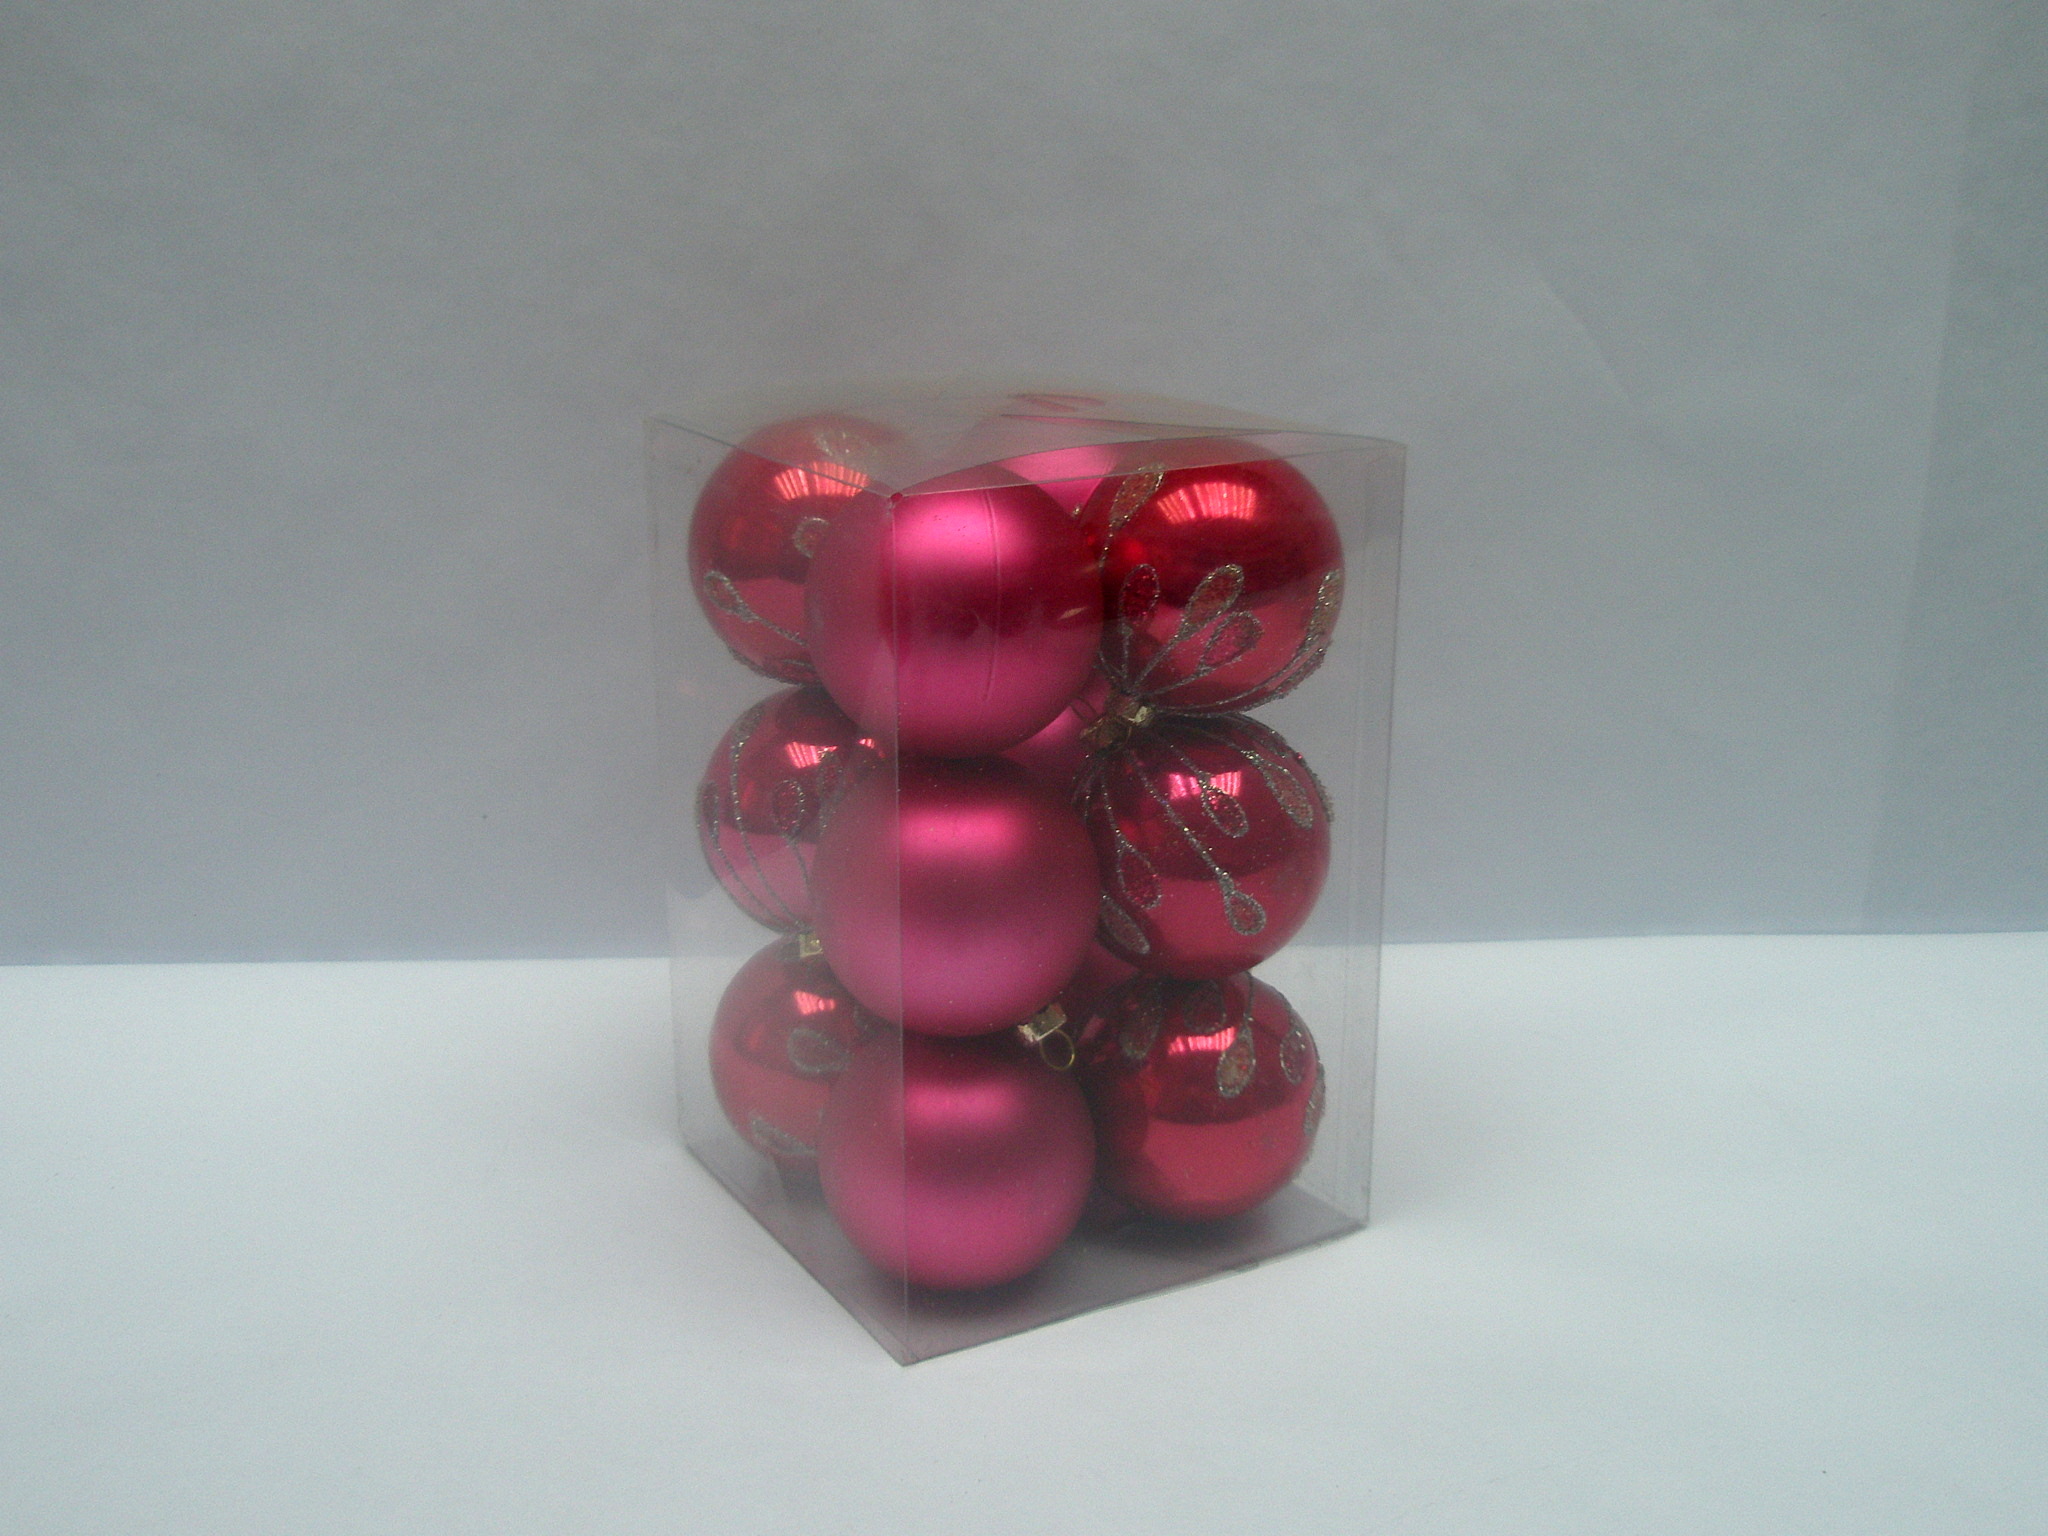 Superior Quality Plastic Christmas Ball Ornament